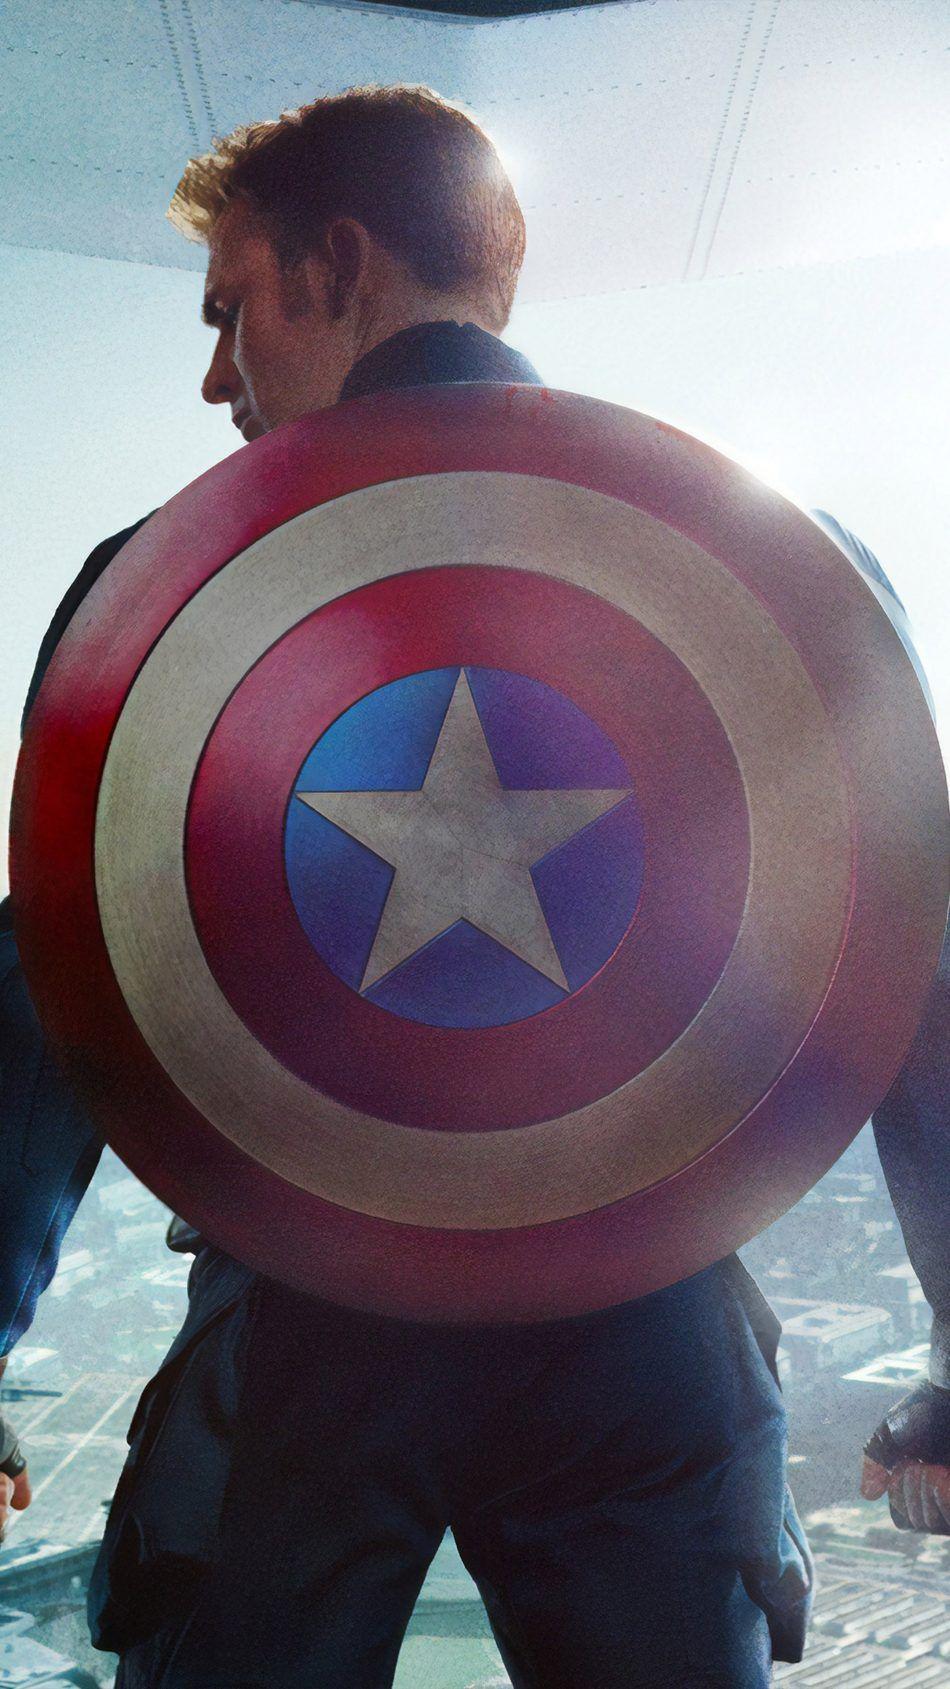 Chris Evans Captain America Shield 4K Ultra HD Mobile Wallpaper. Captain america wallpaper, Chris evans captain america, Captain america aesthetic